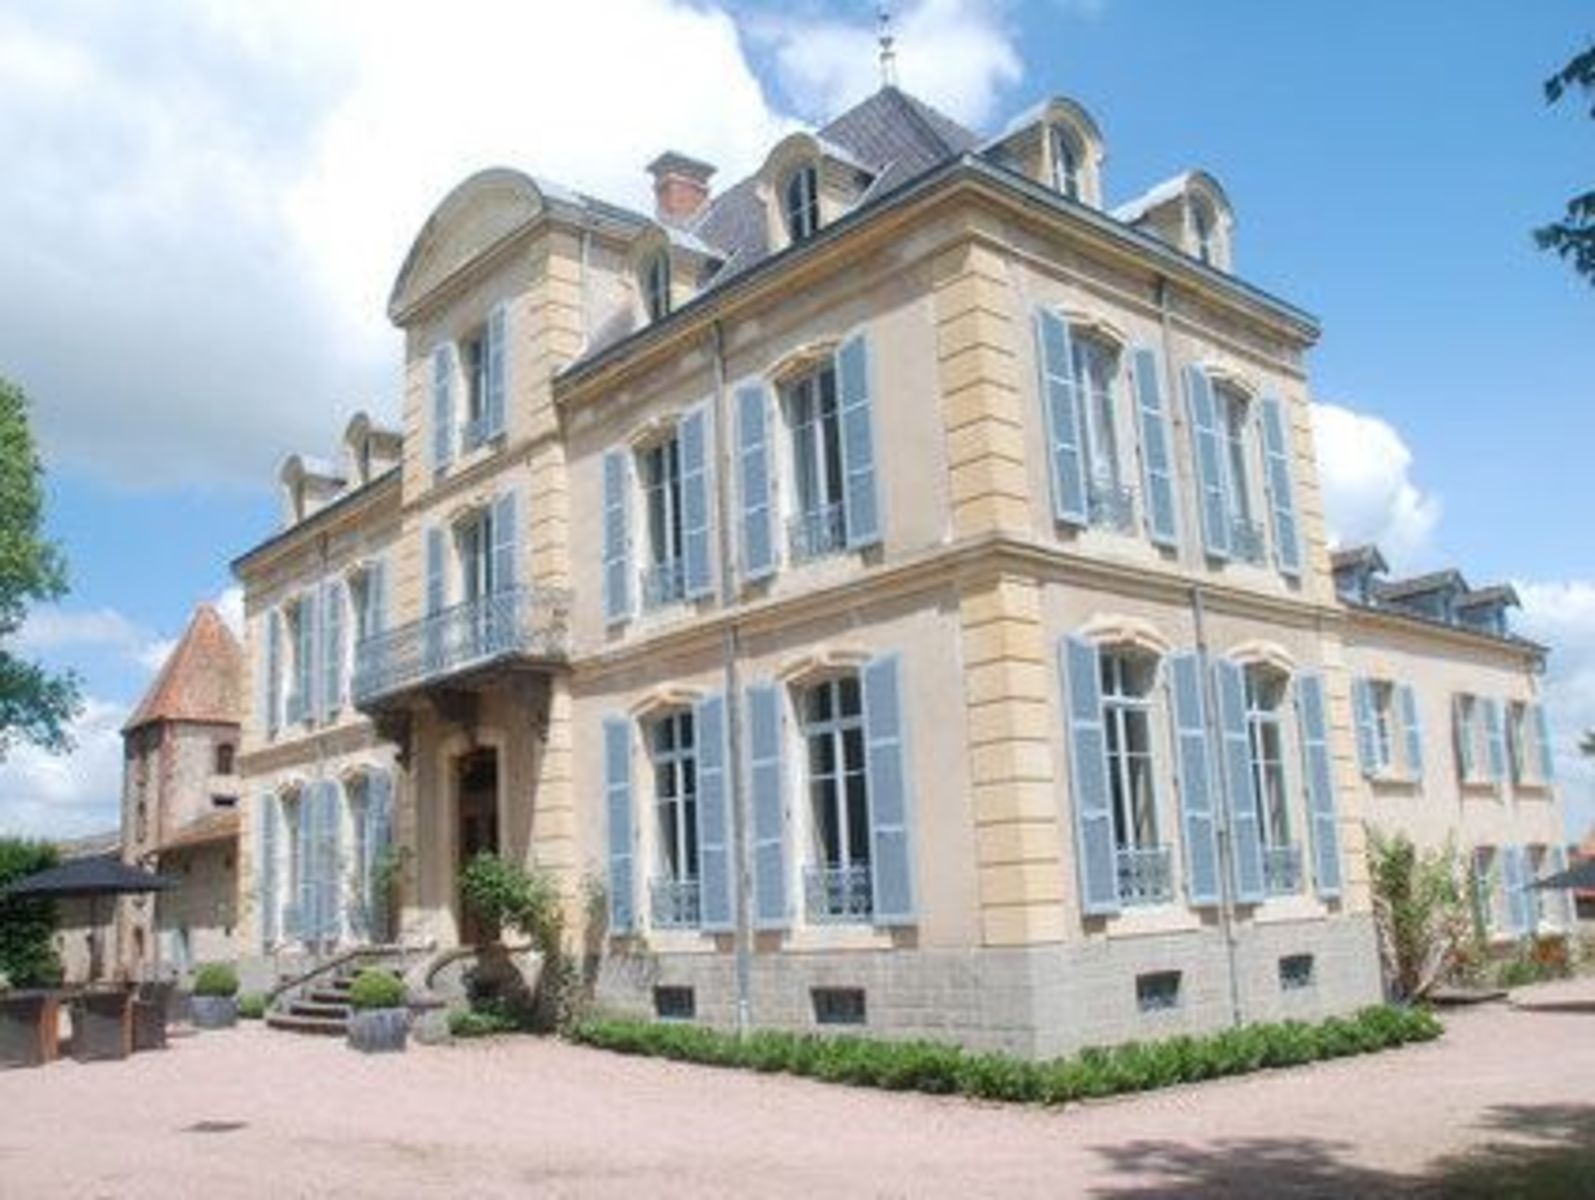 Domaine du Roi François - Château - kasteelvakantie Frankrijk